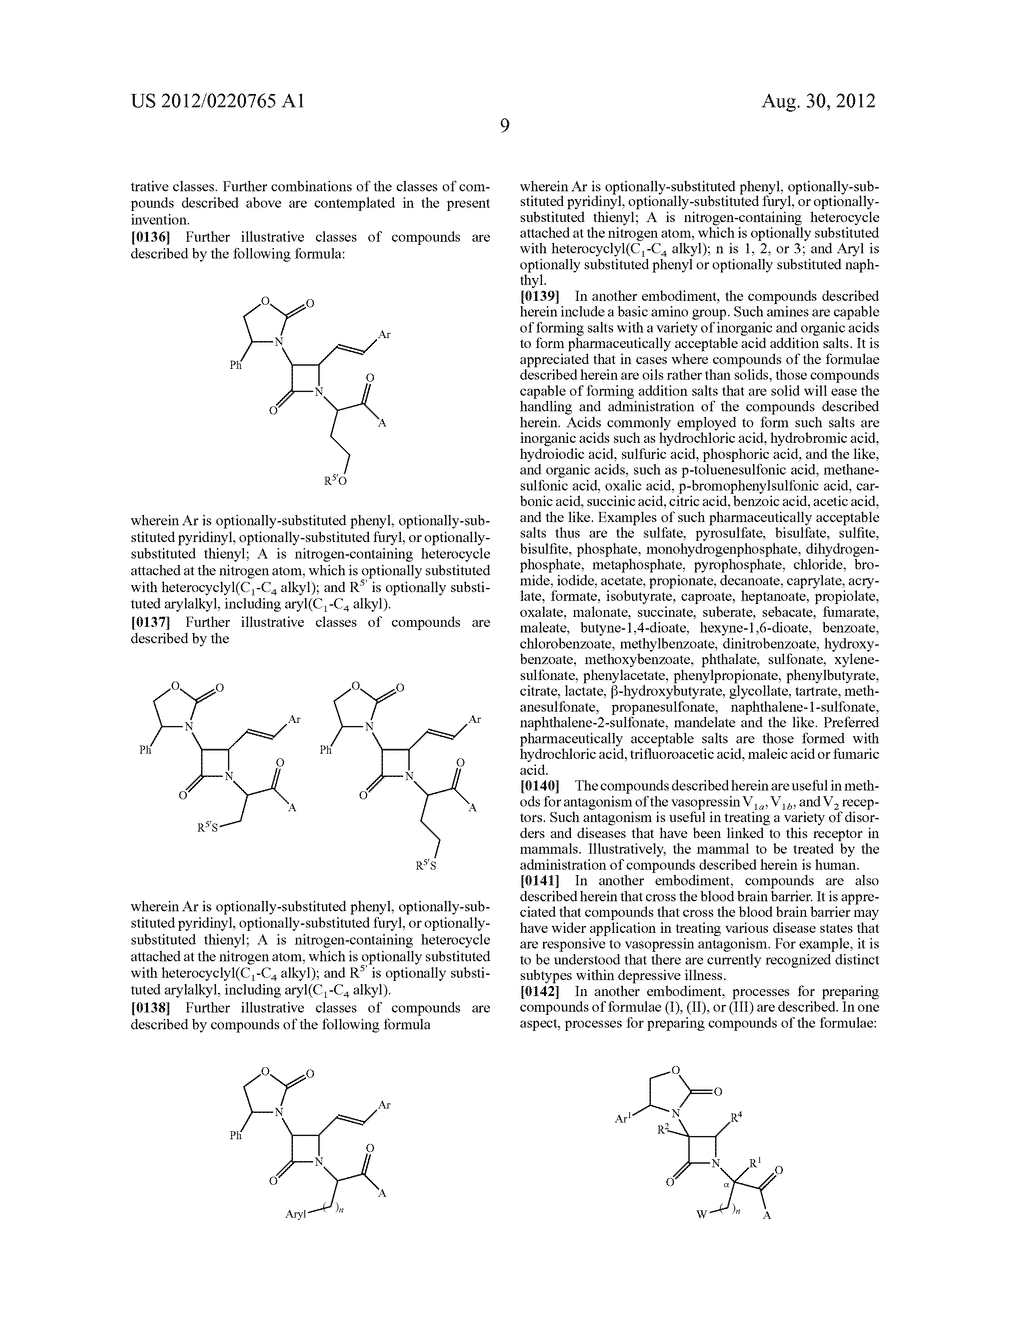 BETA-LACTAMYL PHENYLALANINE, CYSTEINE, AND SERINE VASOPRESSIN ANTAGONISTS - diagram, schematic, and image 11